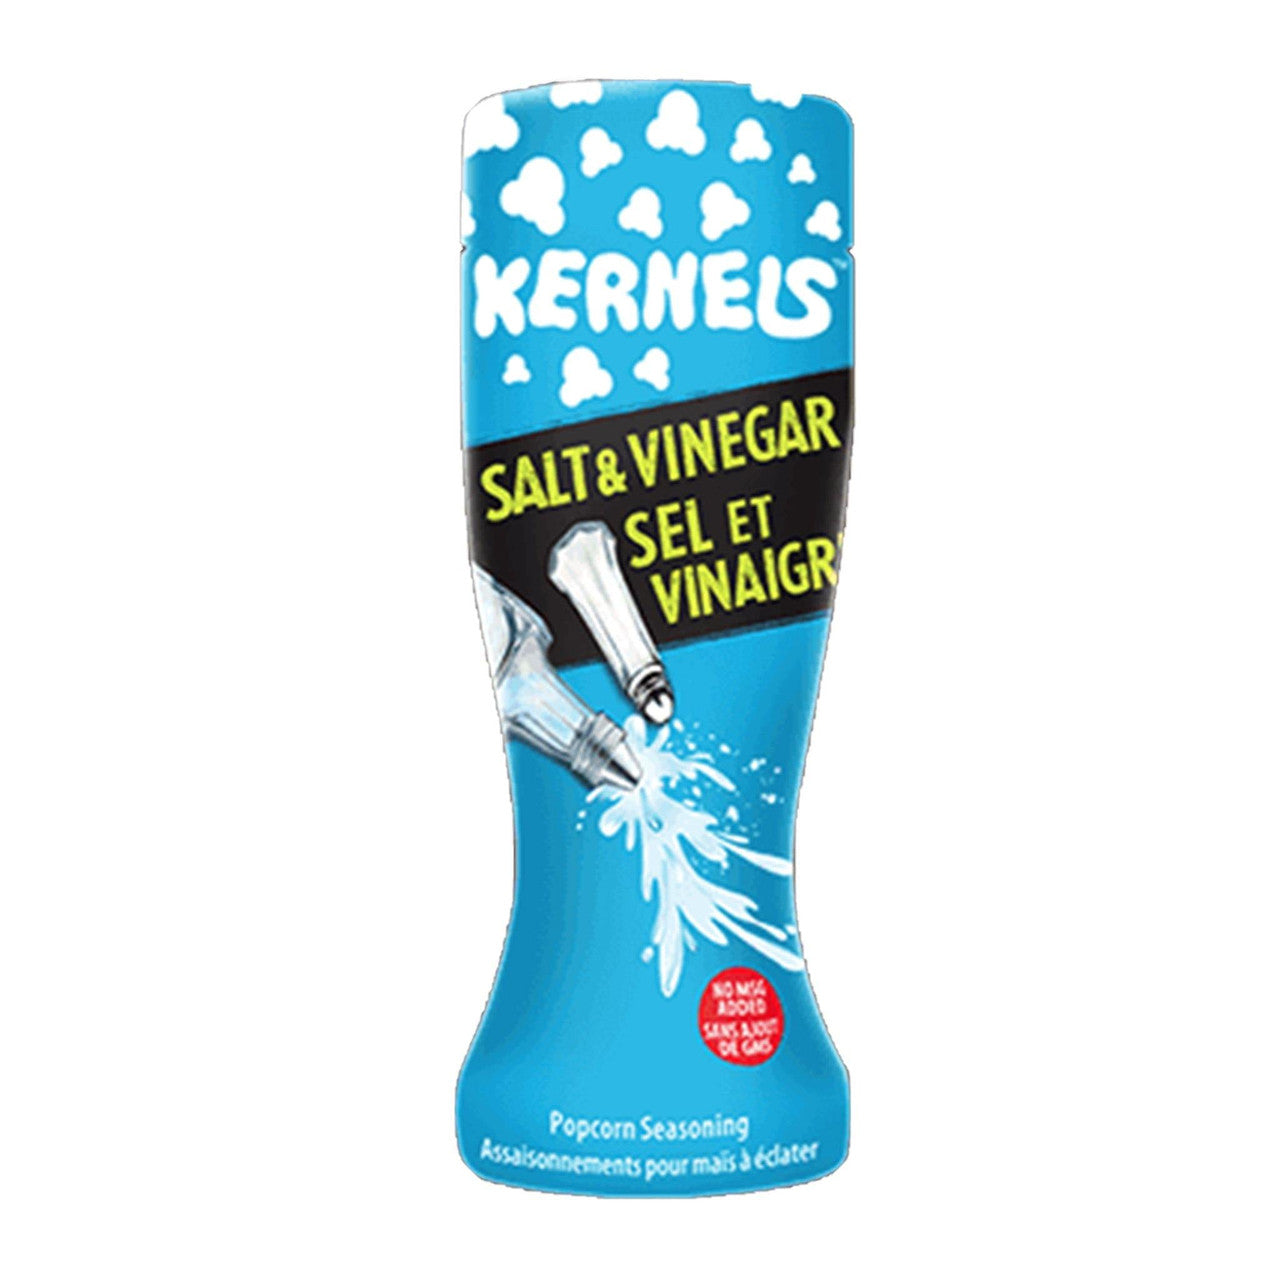 Kernels Popcorn Seasoning Salt and Vinegar 110g - {Imported from Canada}